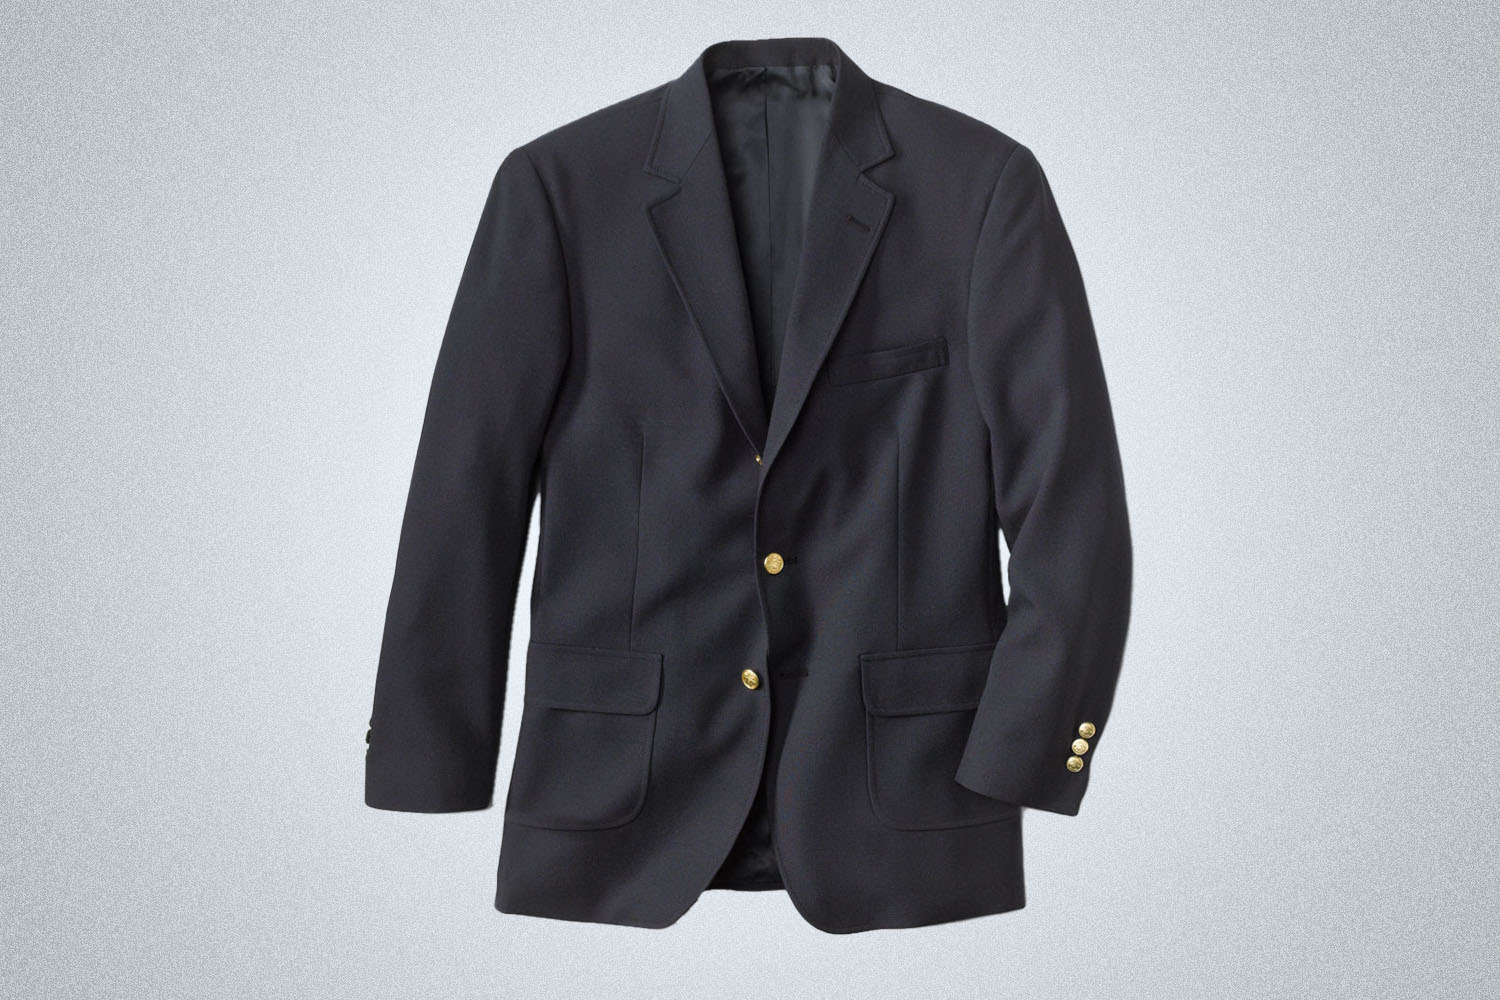 a navy blazer on a grey background